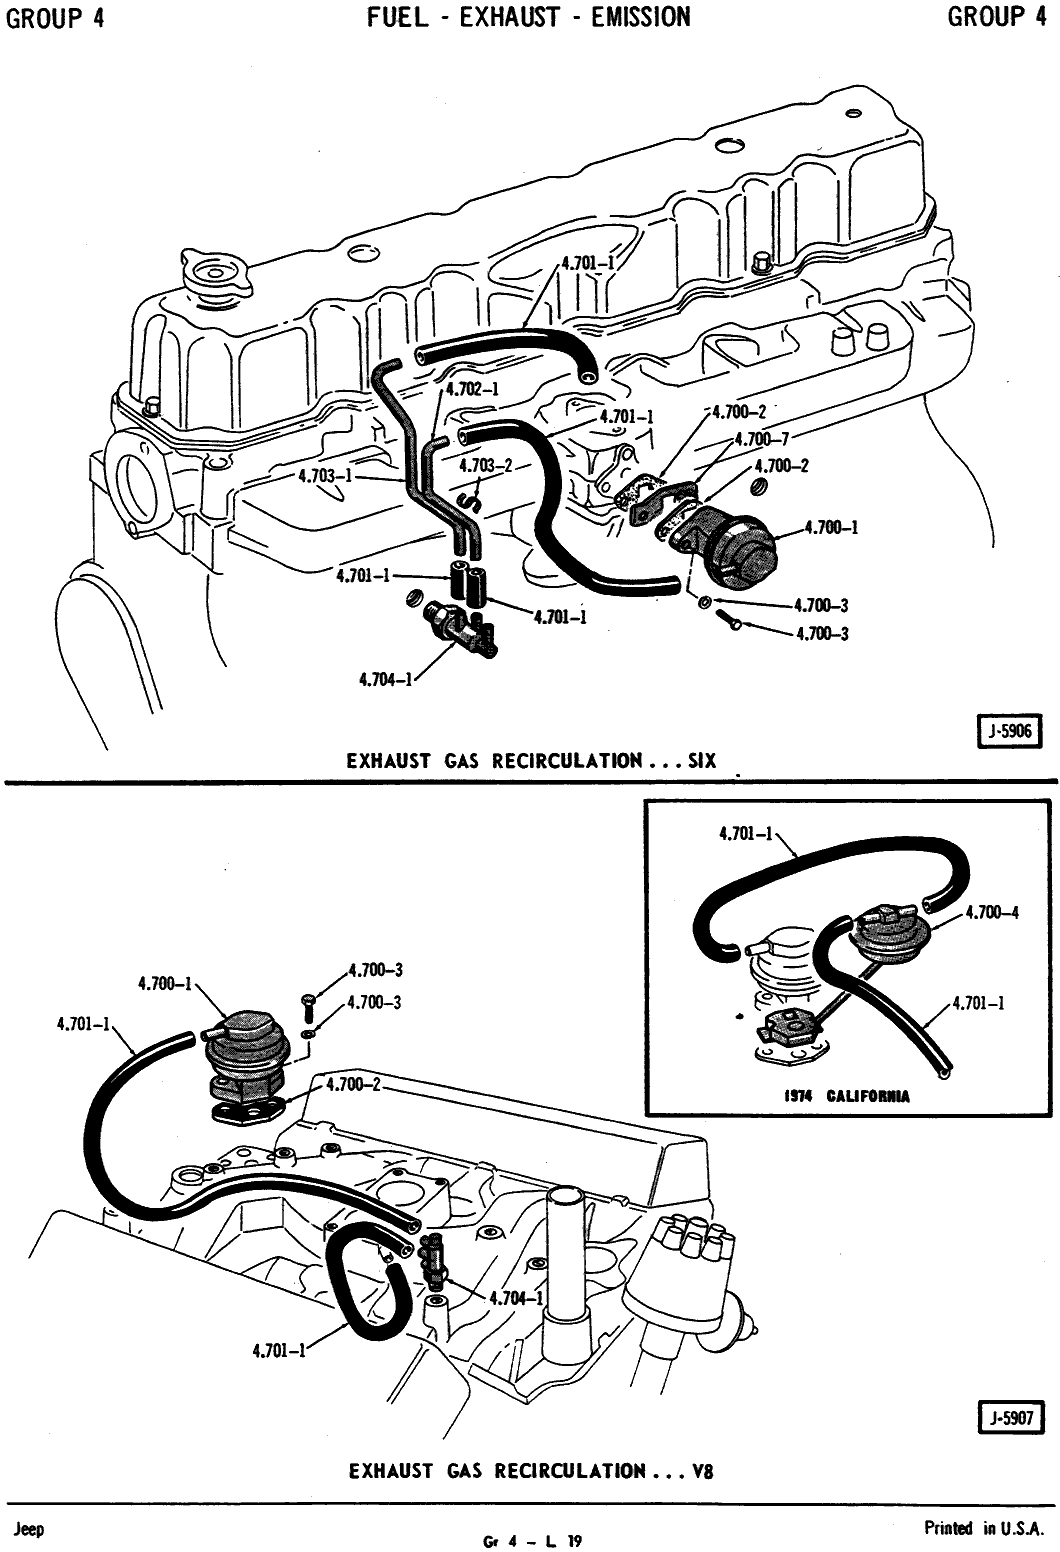 1977 Jeep j10 360 vacuum hose routing diagrams #2